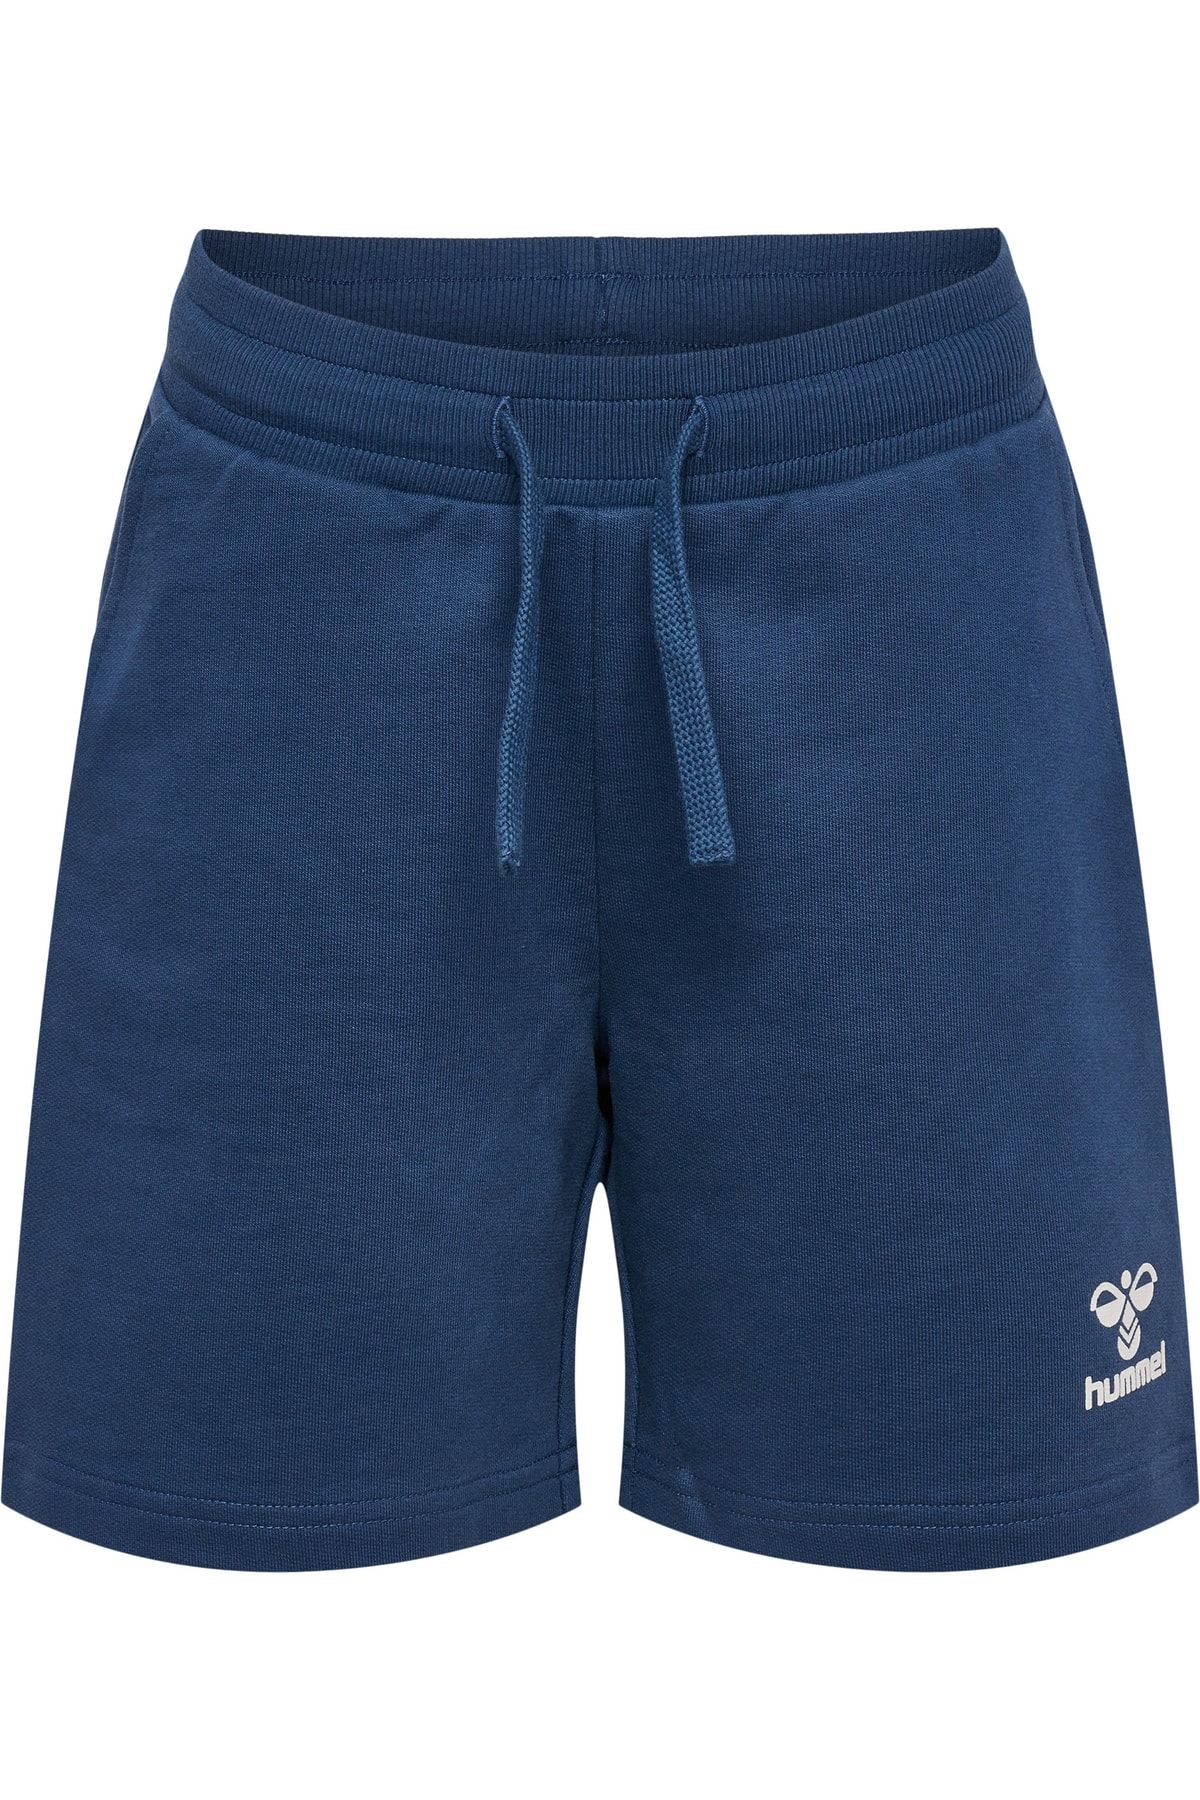 HUMMEL Shorts - Blau - Mittlerer Bund - Trendyol | Trainingshosen